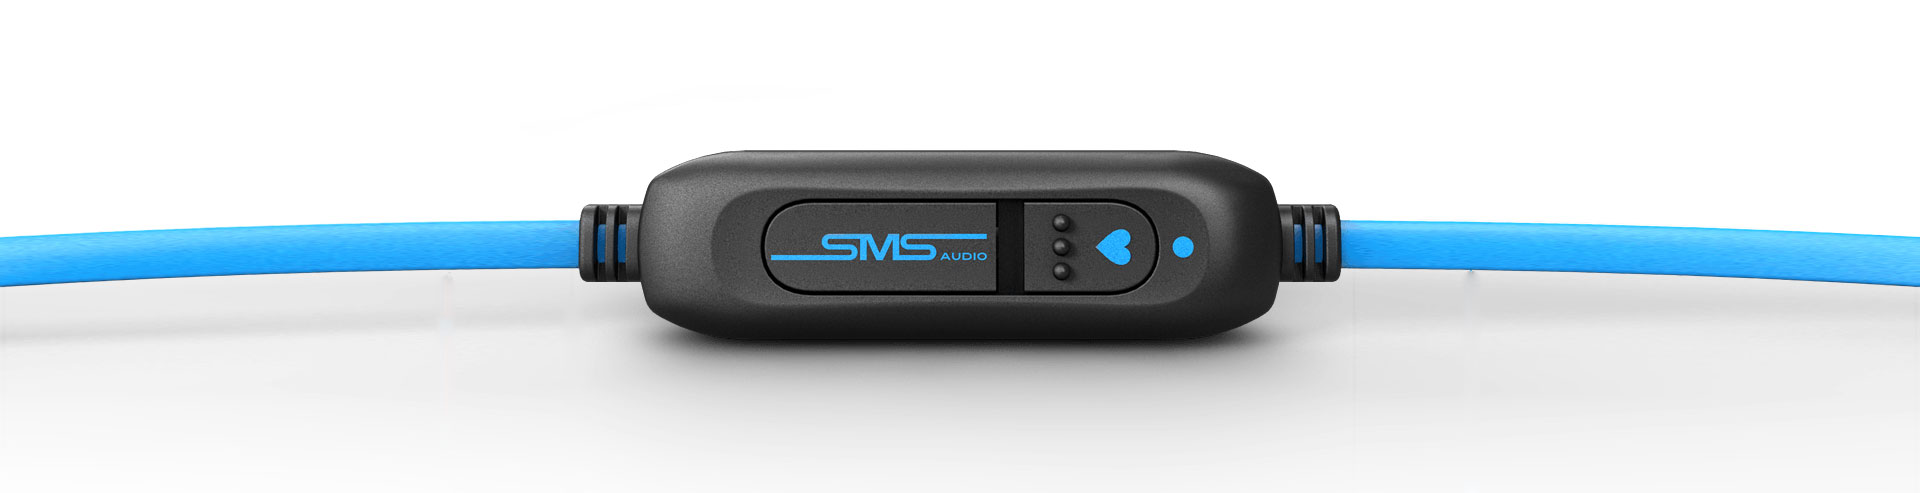 SMS-Audio-Biosport-Remote